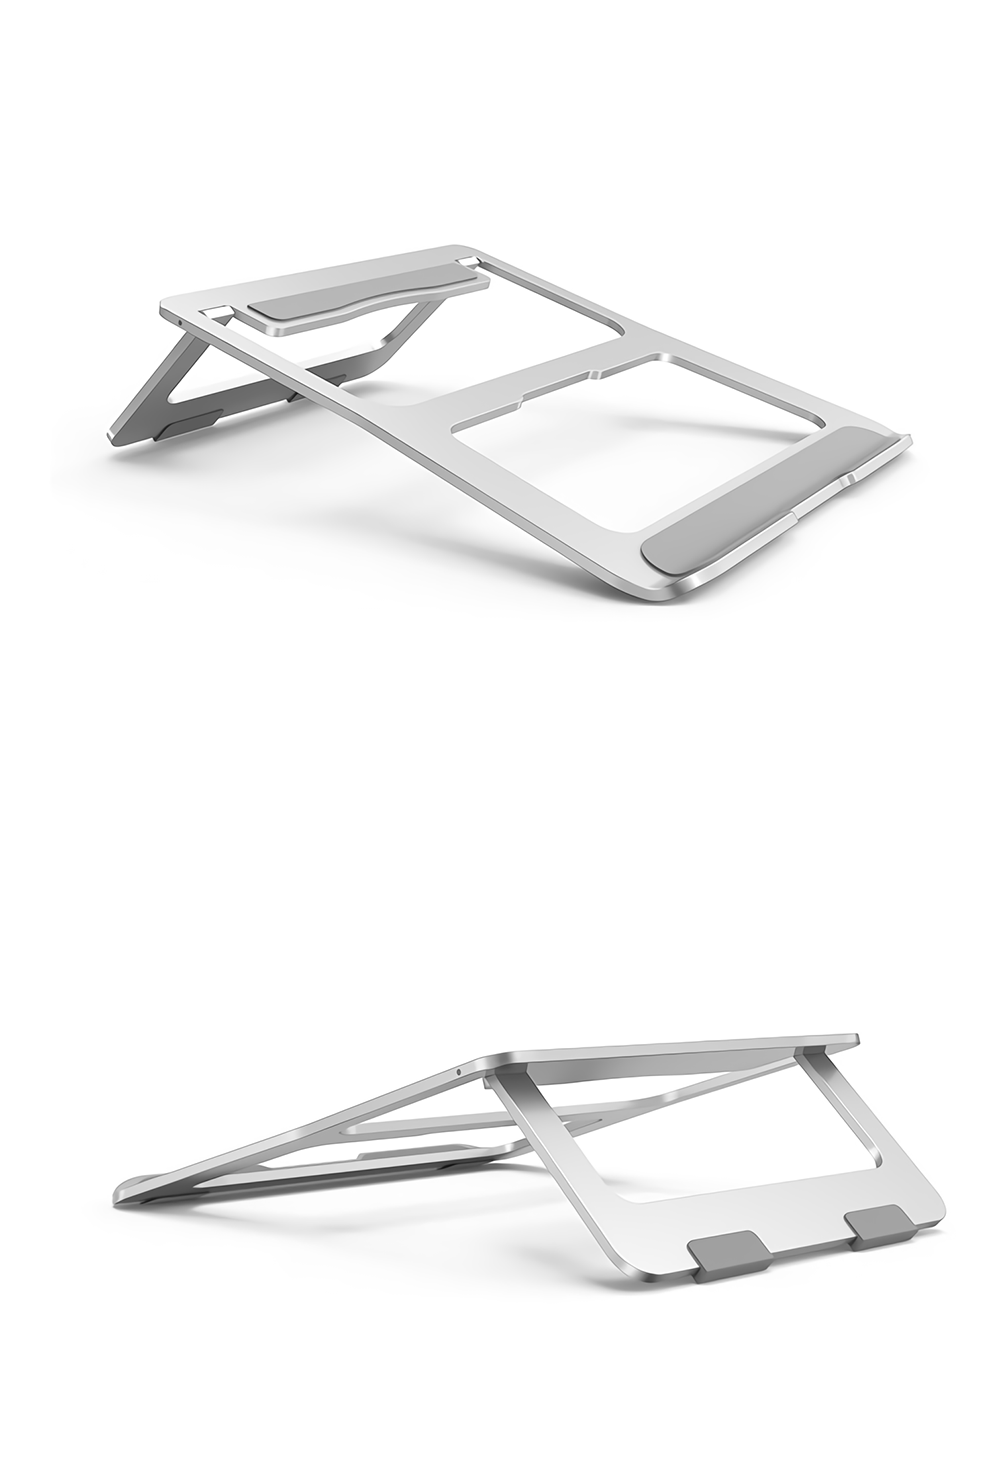 Universal-Folding-Laptop-Stand-Bracket-Aluminum-Alloy-Cooling-Desk-Stand-PC-Tablet-Holder-Base-1588623-2